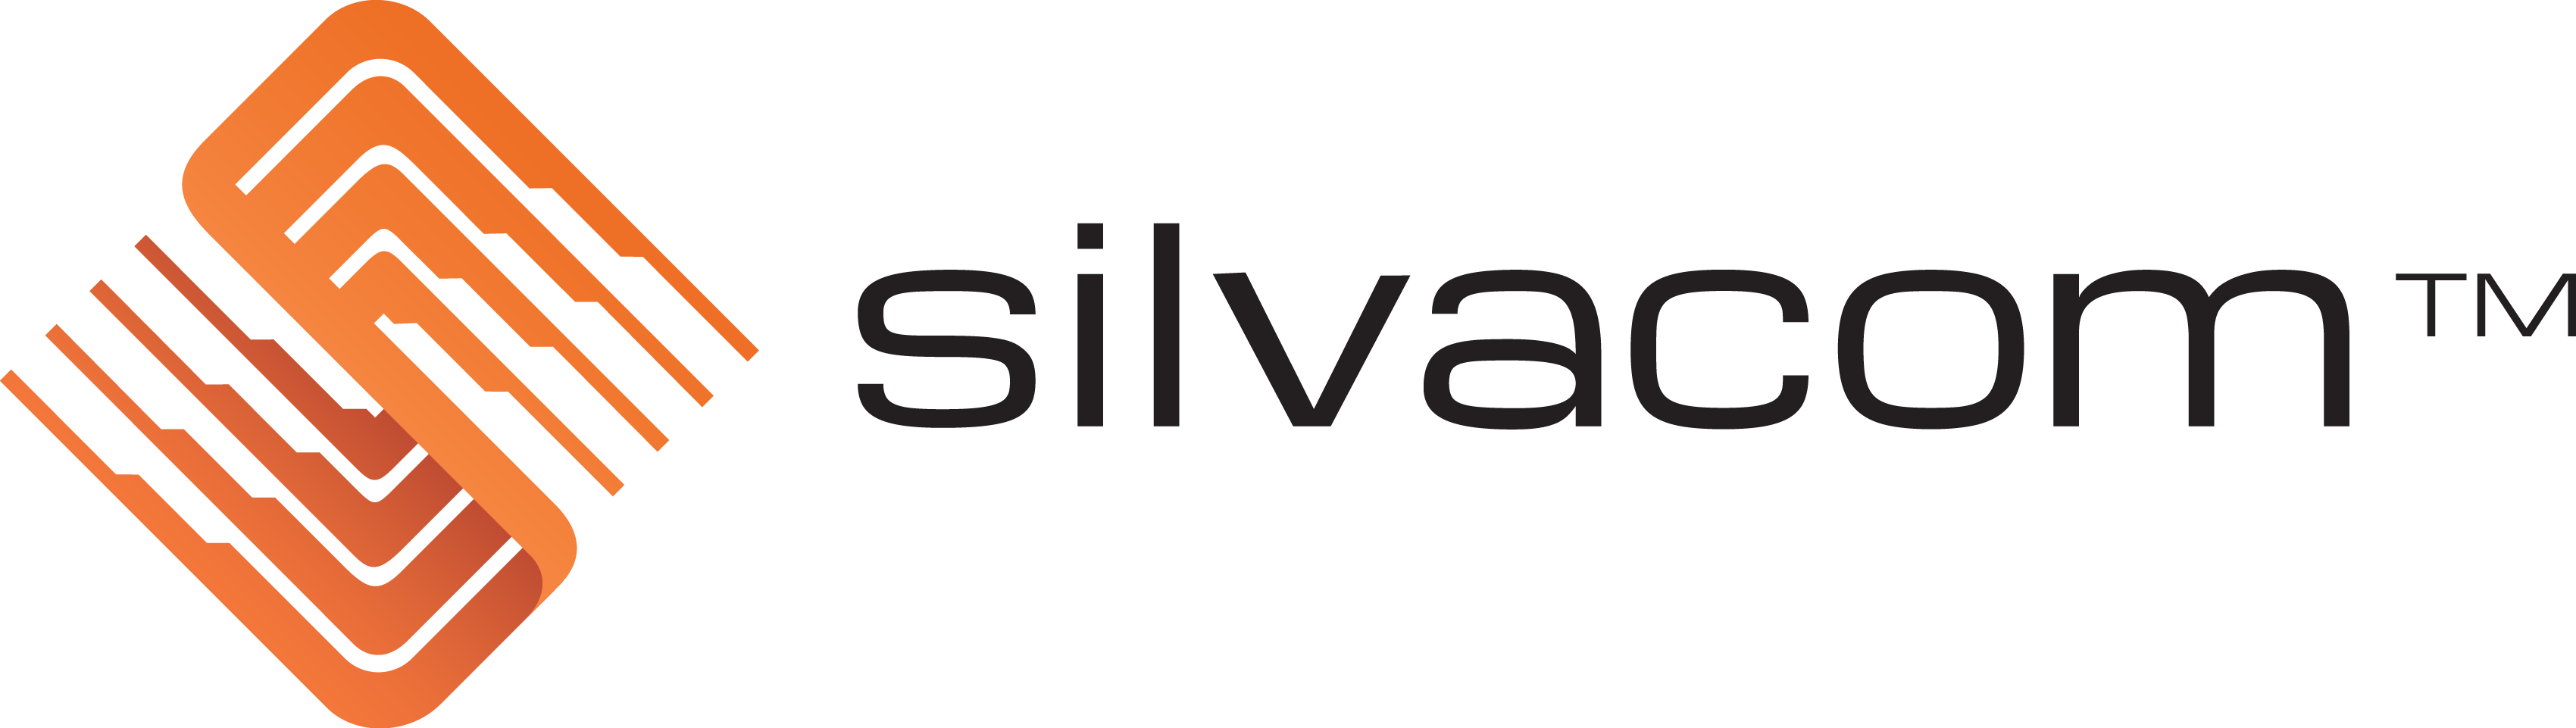 Silvacom_Logo_Horizontal_GRAD_BLACK